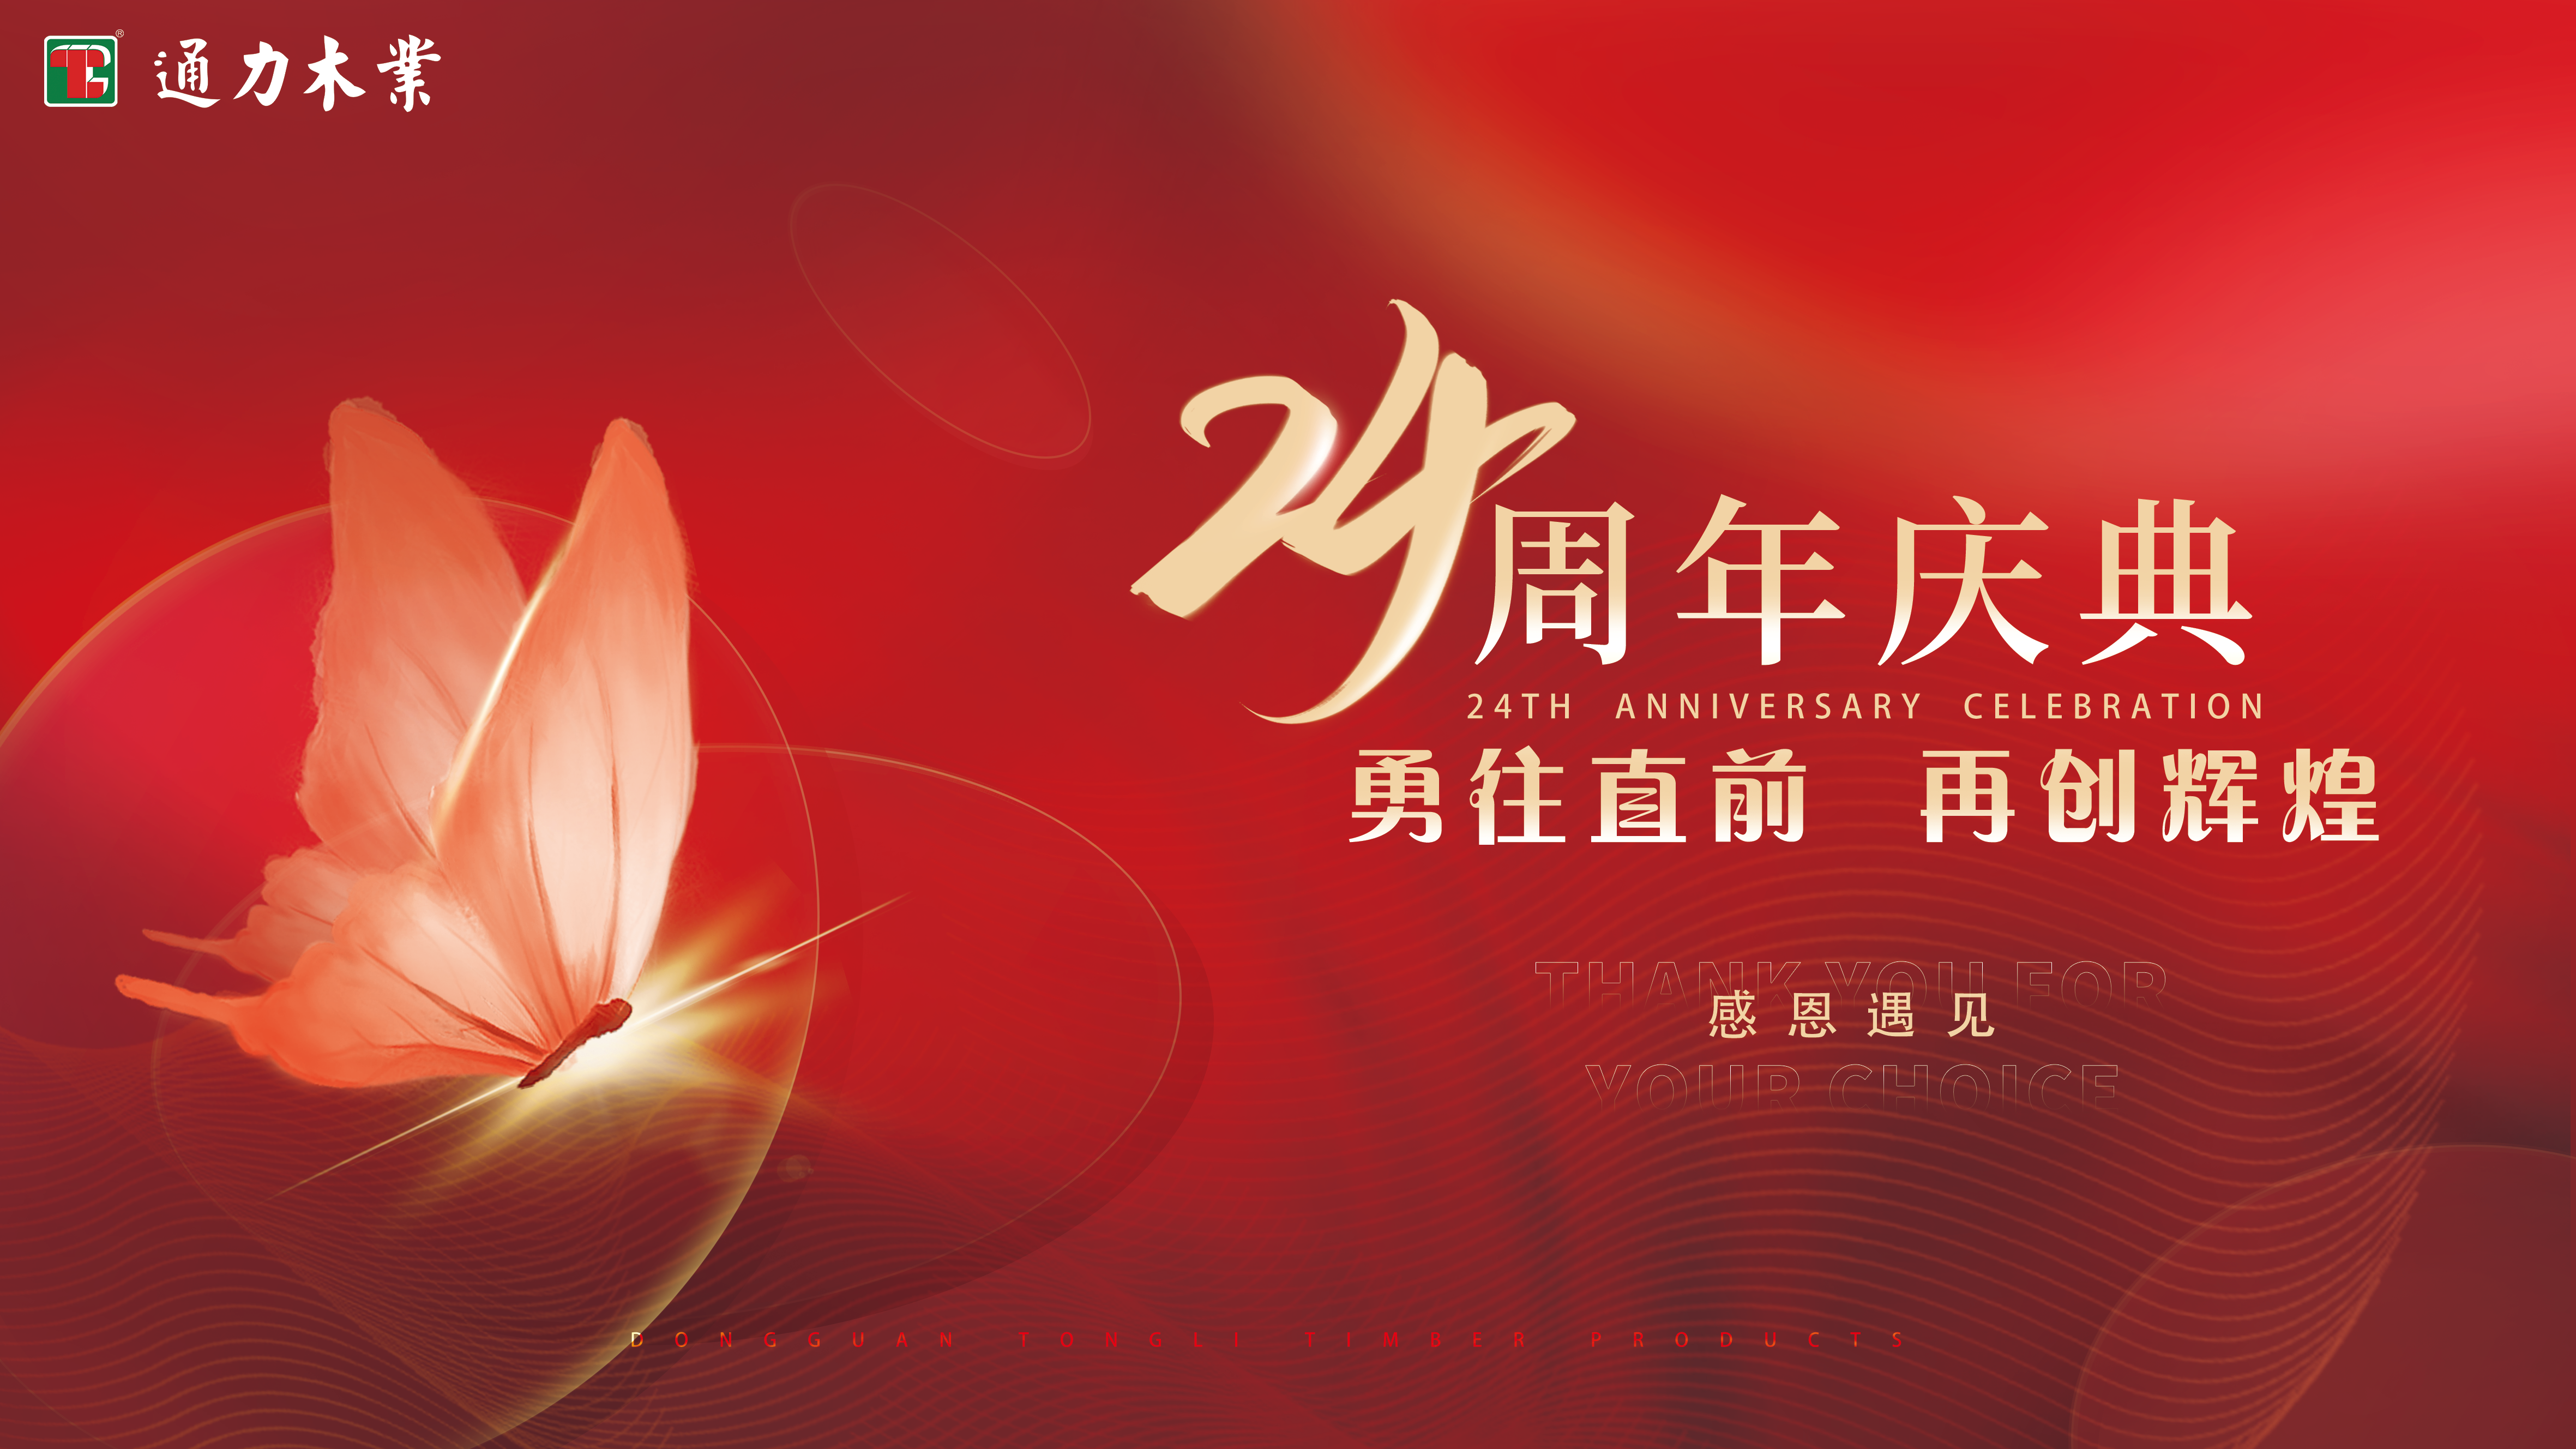 Dongguan Tongli Timber Products Co., Ltd. 24 anni di eccellenza e innovazione